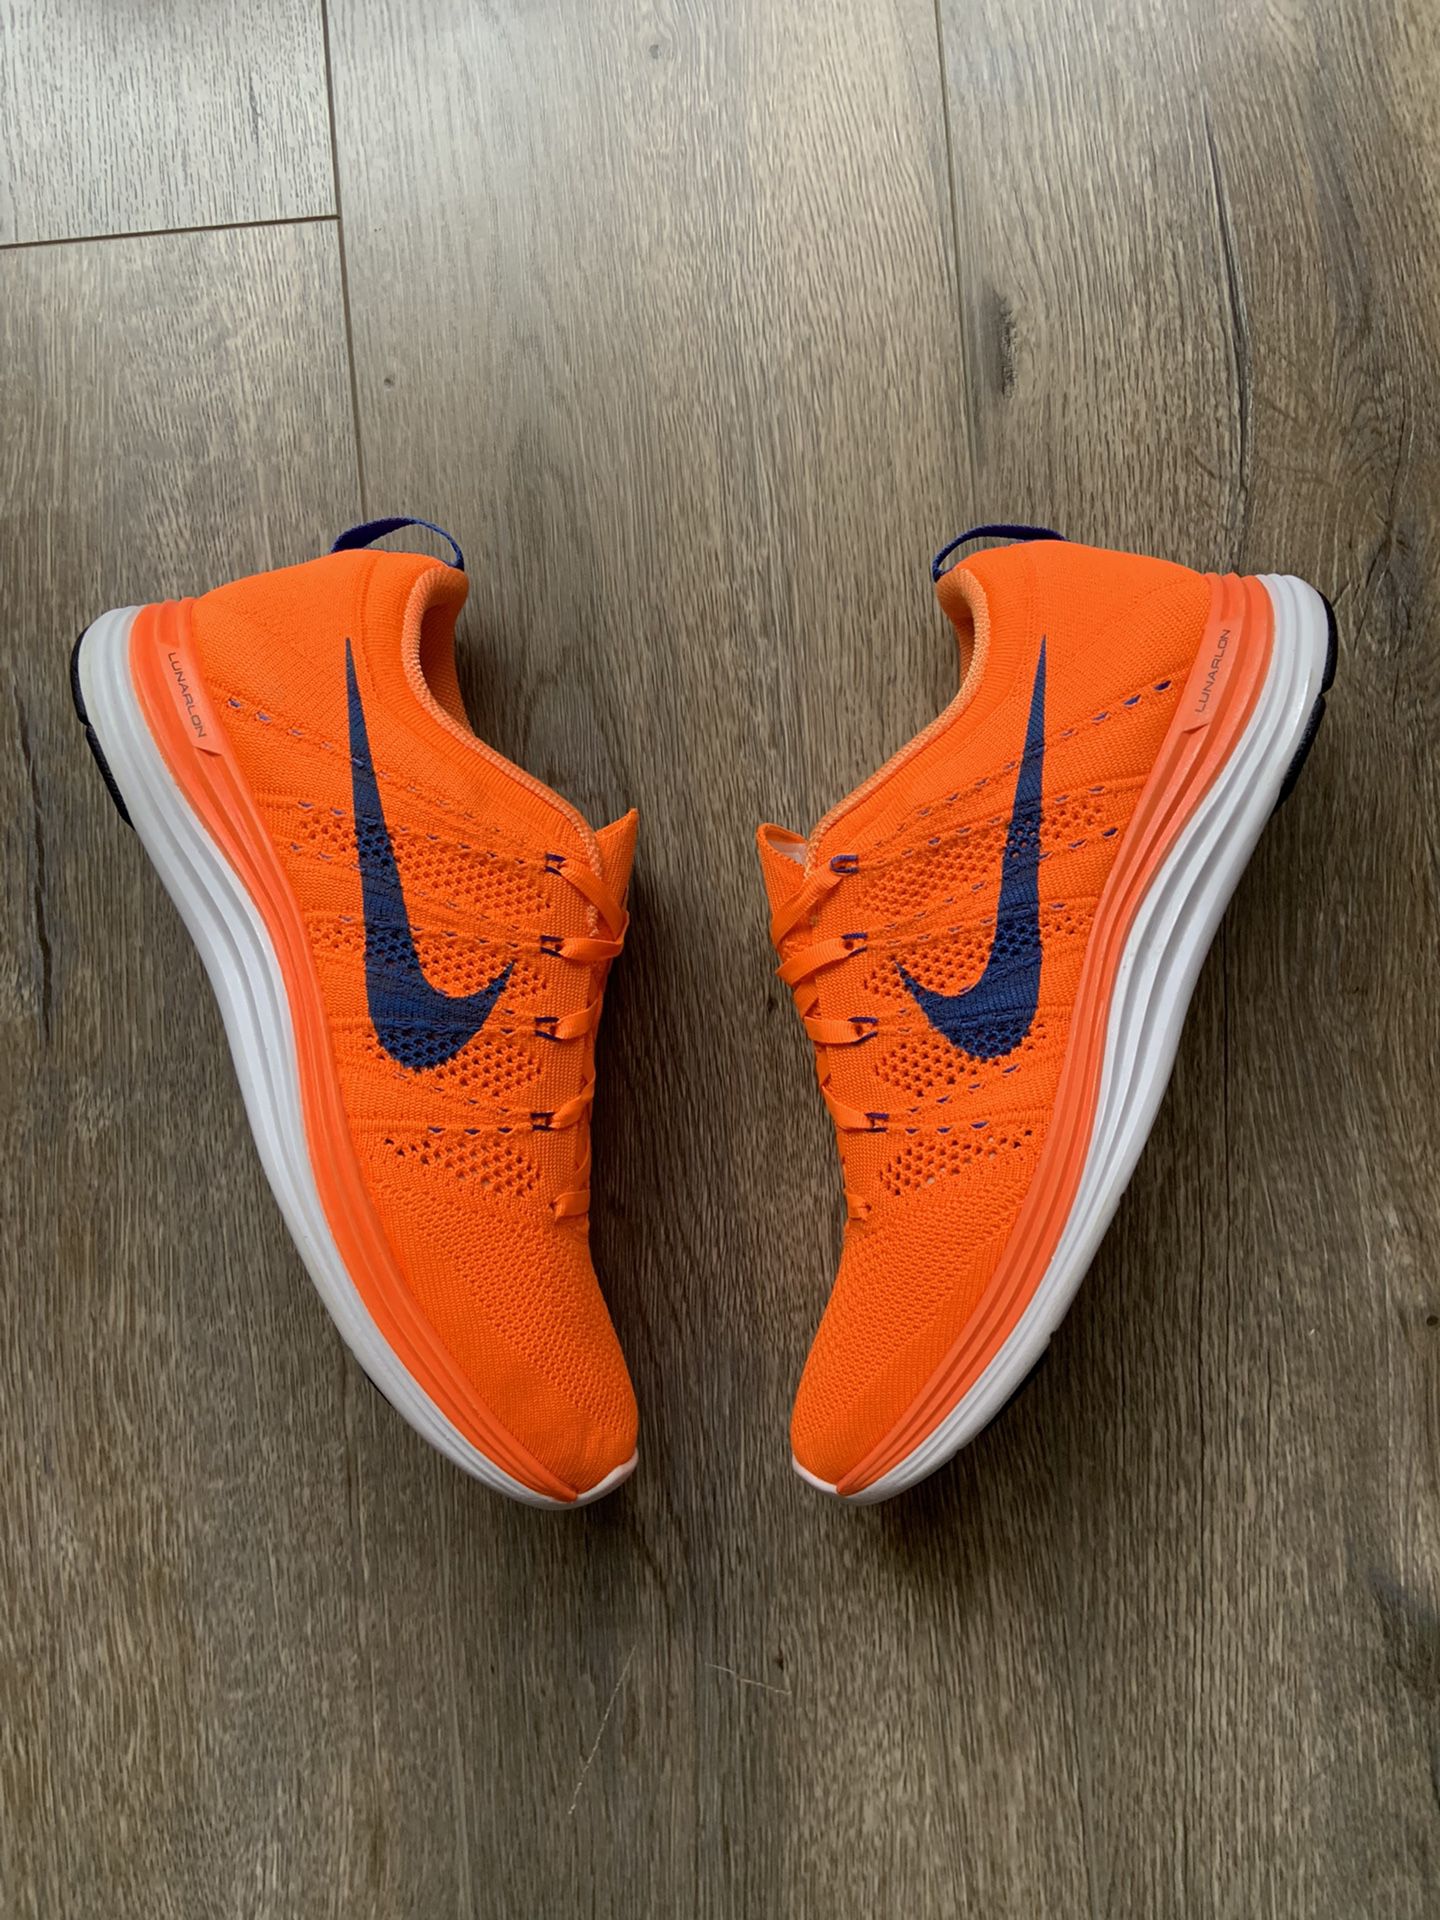 Nike Flyknit Lunar 1 Running Shoes Mens Size 9 Neon Orange Blue Lunar1+